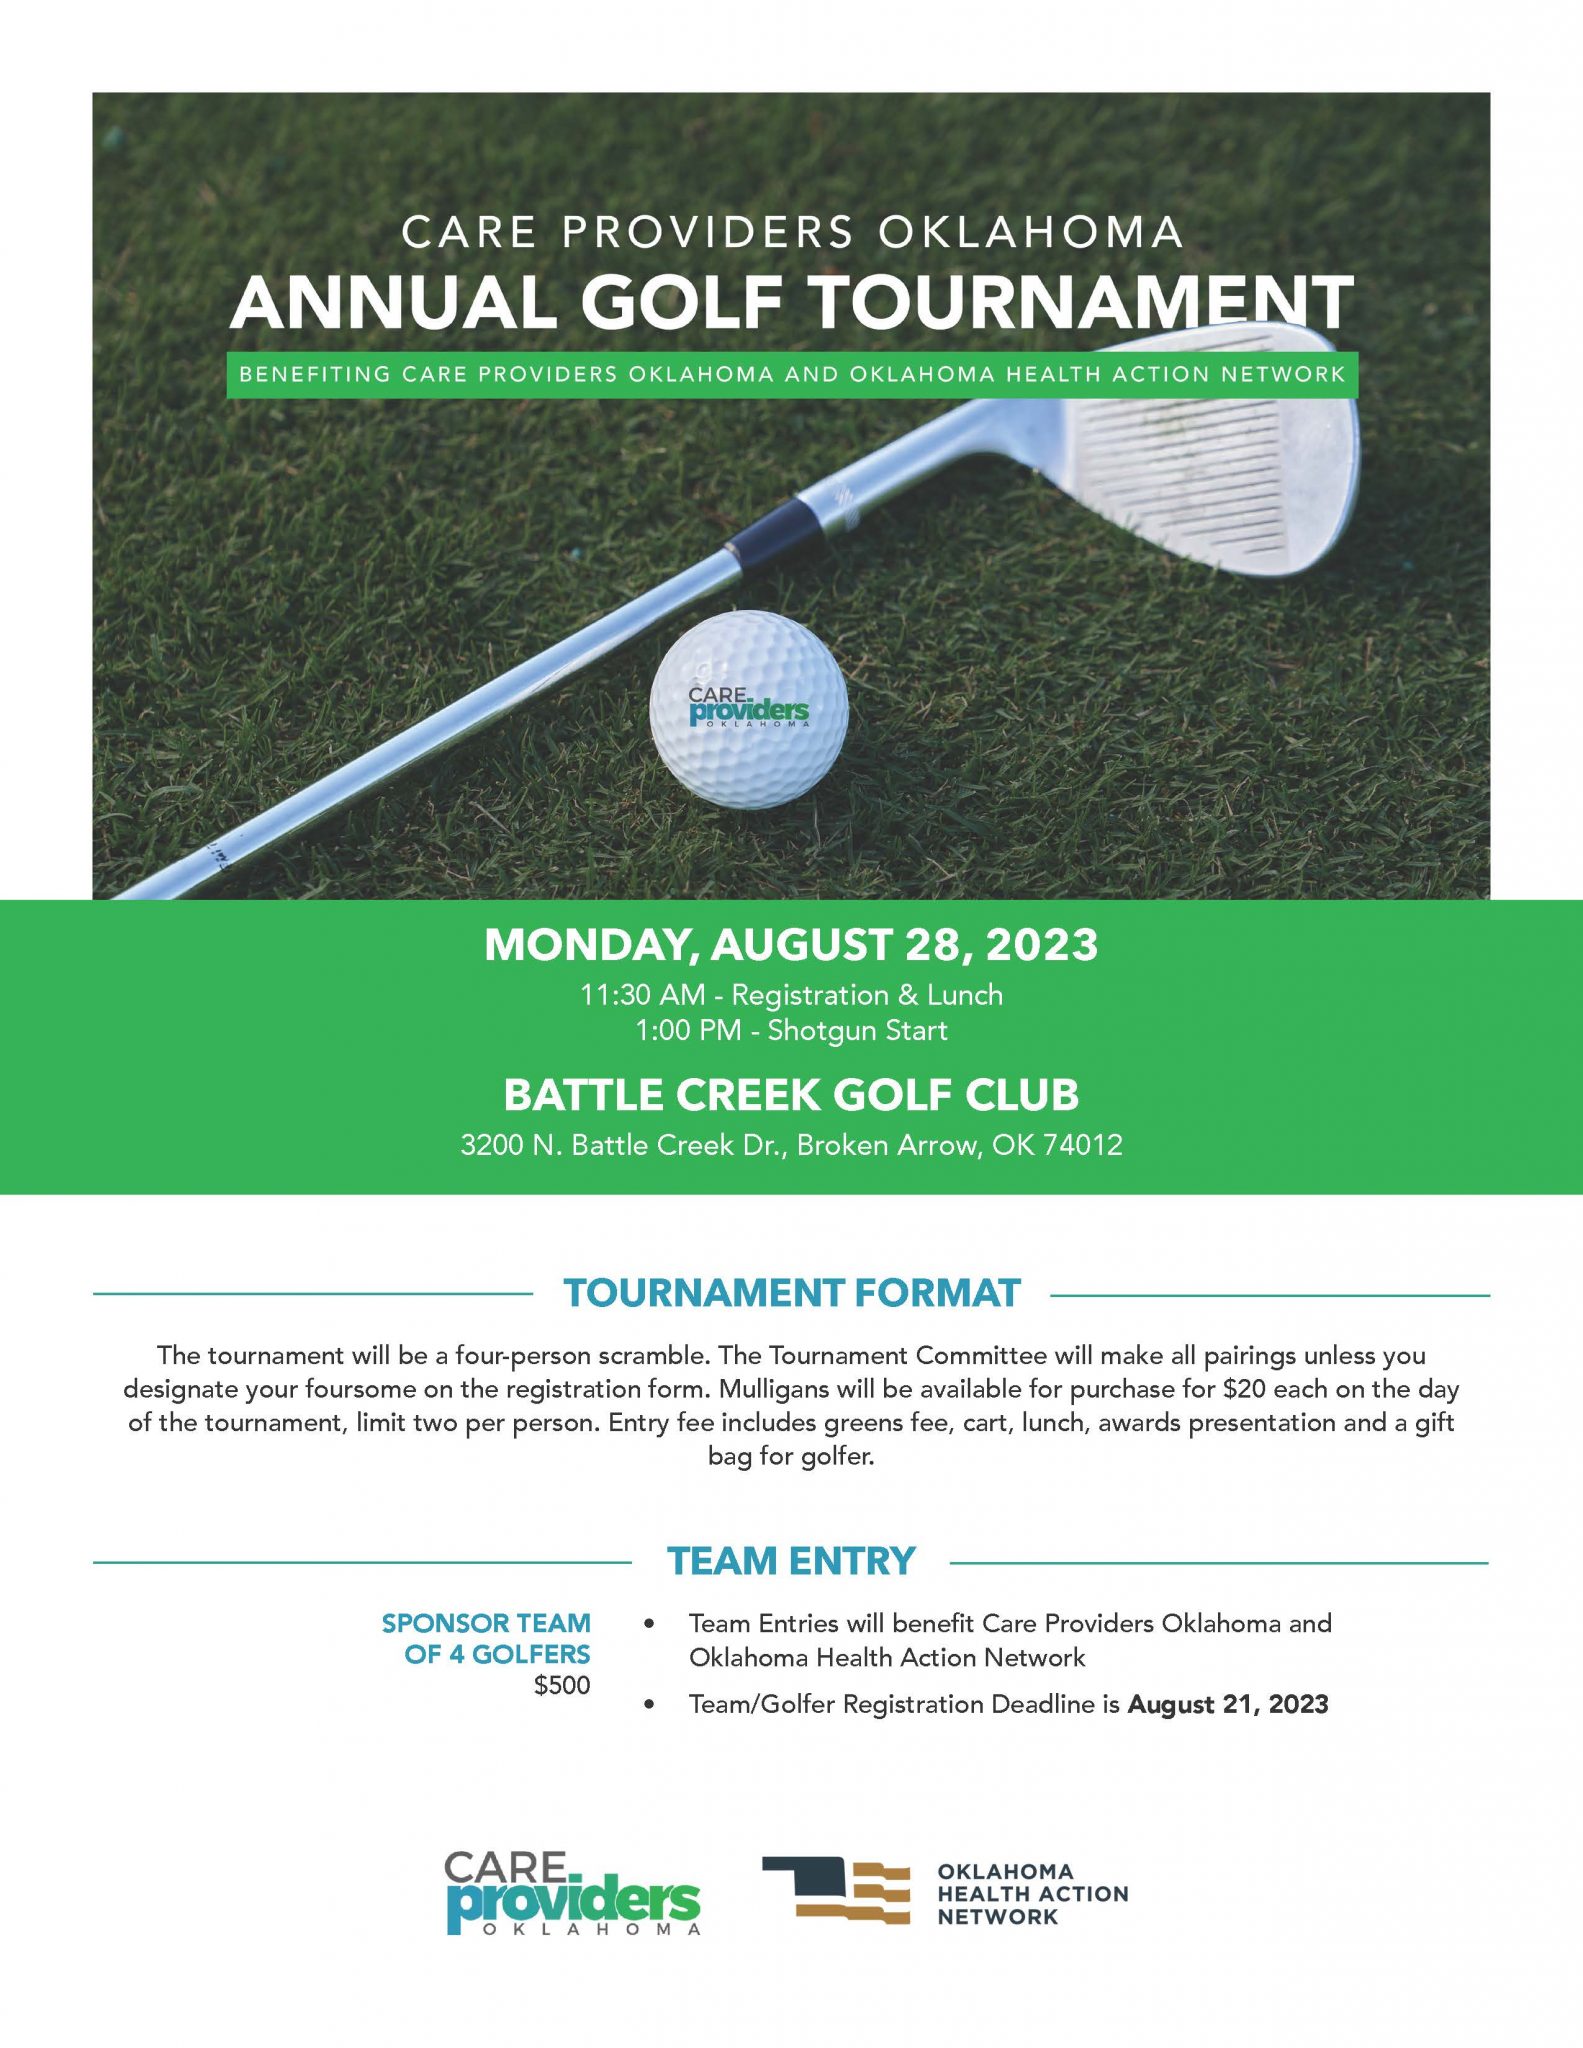 Golf Tournament Care Providers Oklahoma